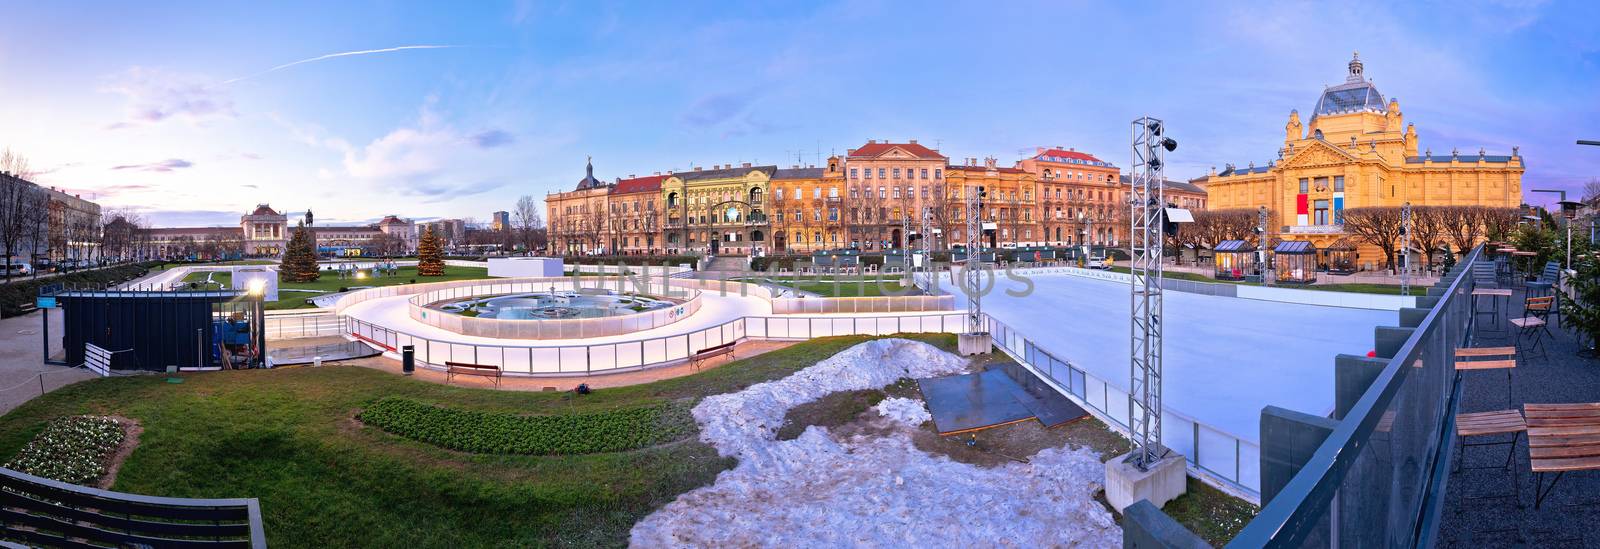 Tomislav square in Zagreb ice skate park advent evening panorami by xbrchx